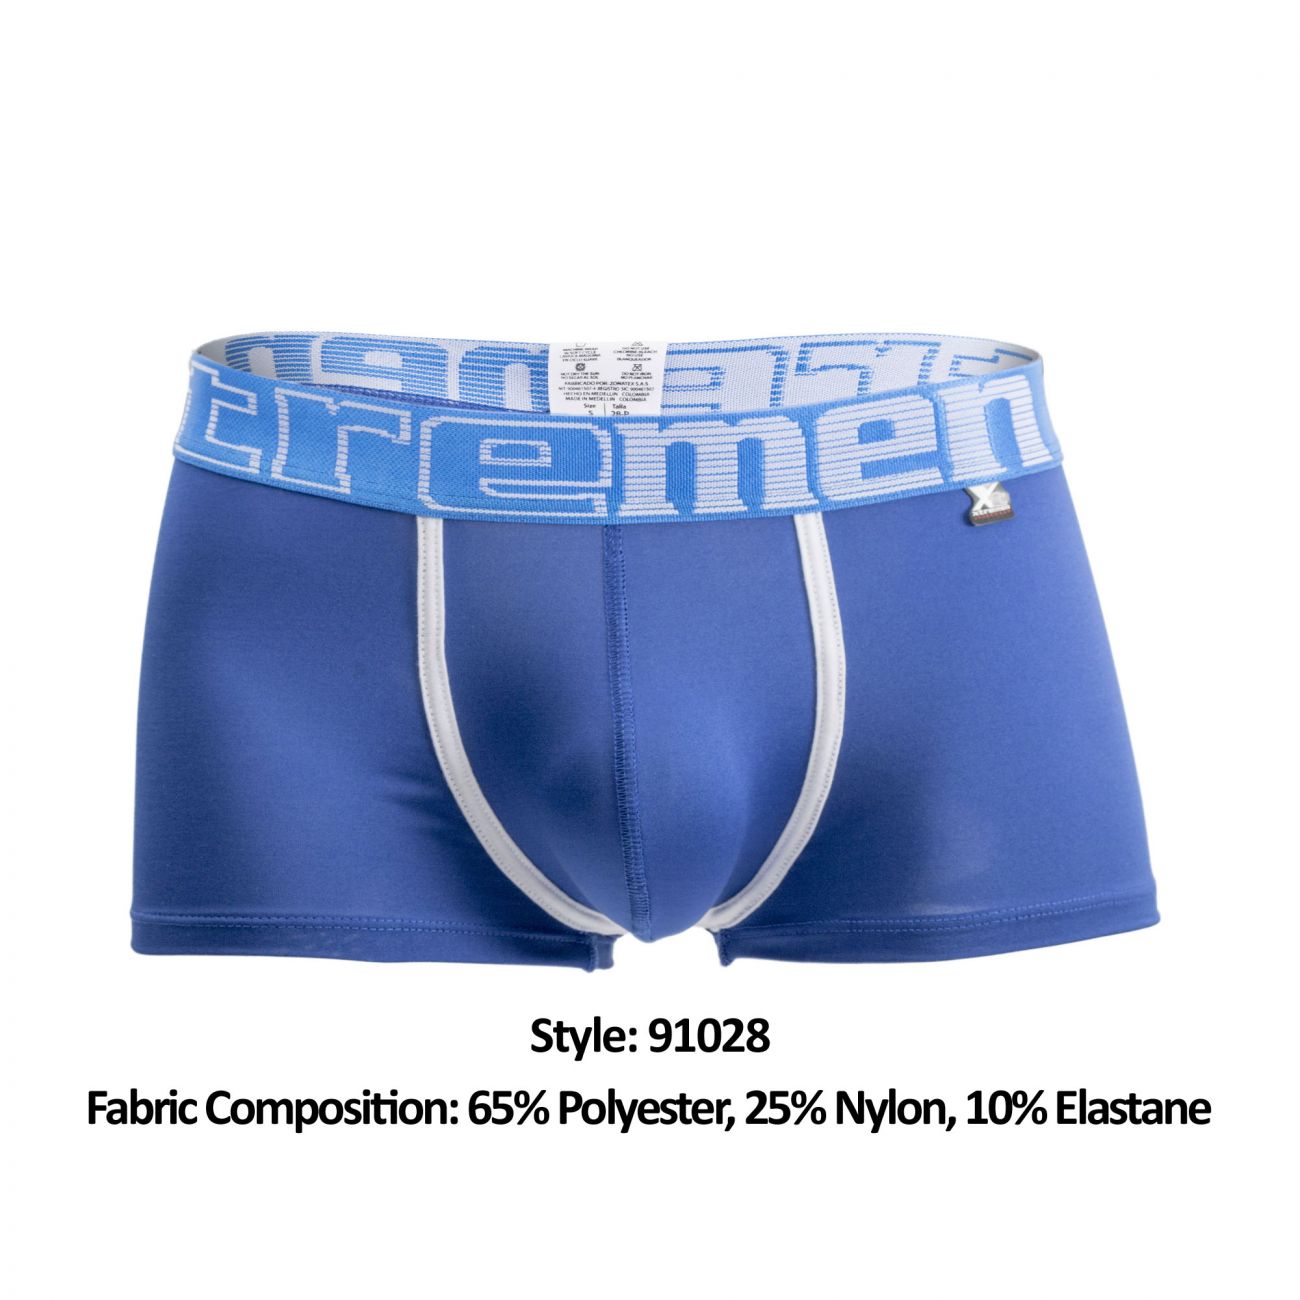 Xtremen 91028 Piping Boxer Briefs Color Blue